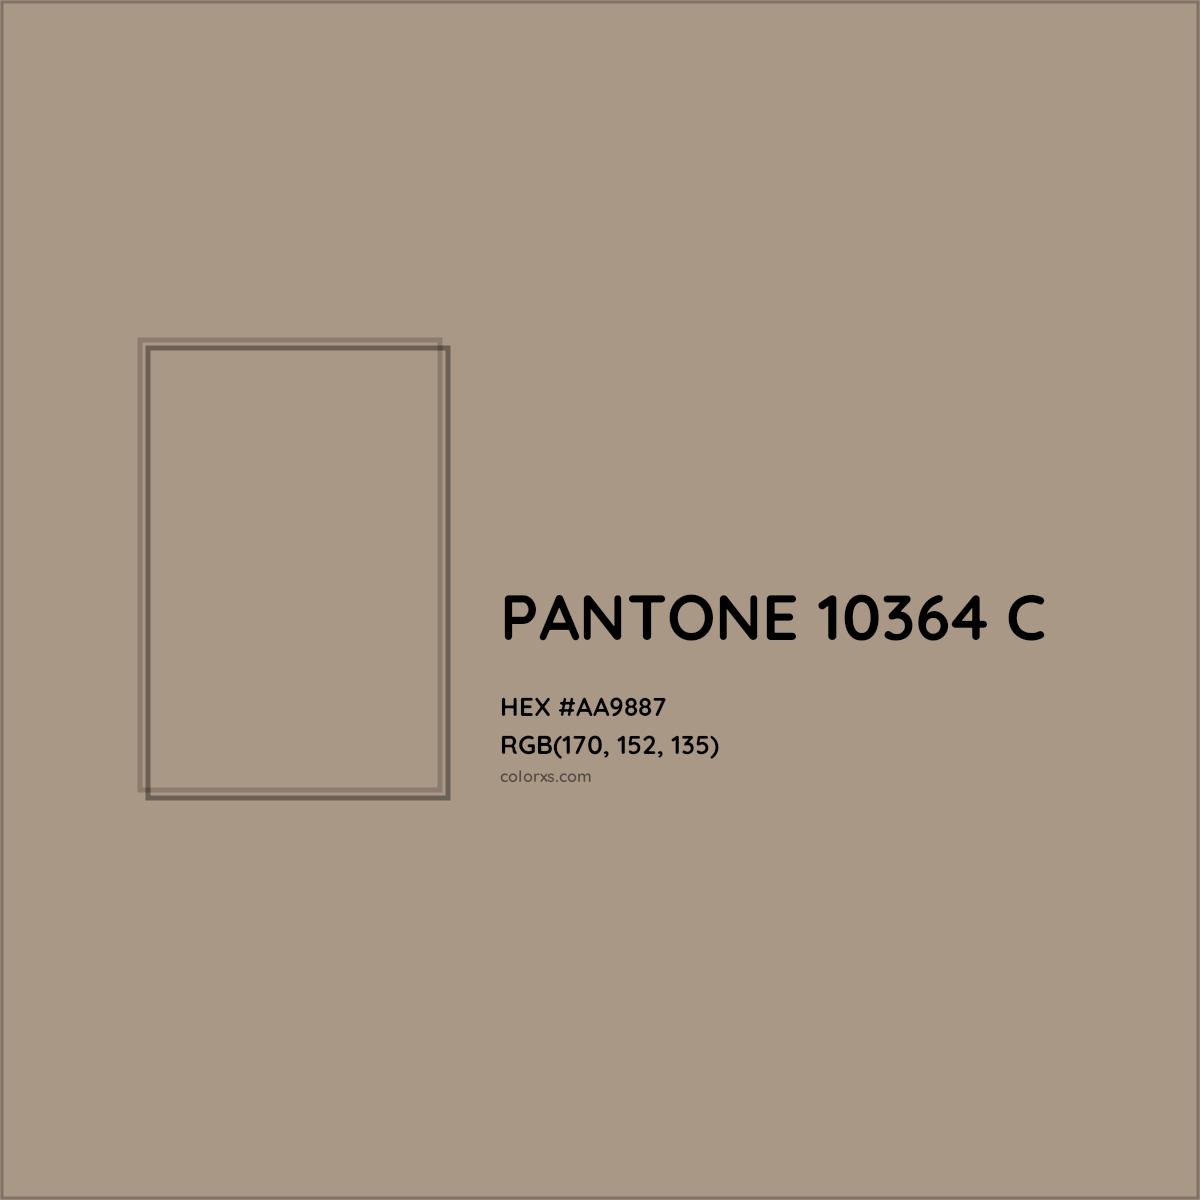 HEX #AA9887 PANTONE 10364 C CMS Pantone PMS - Color Code